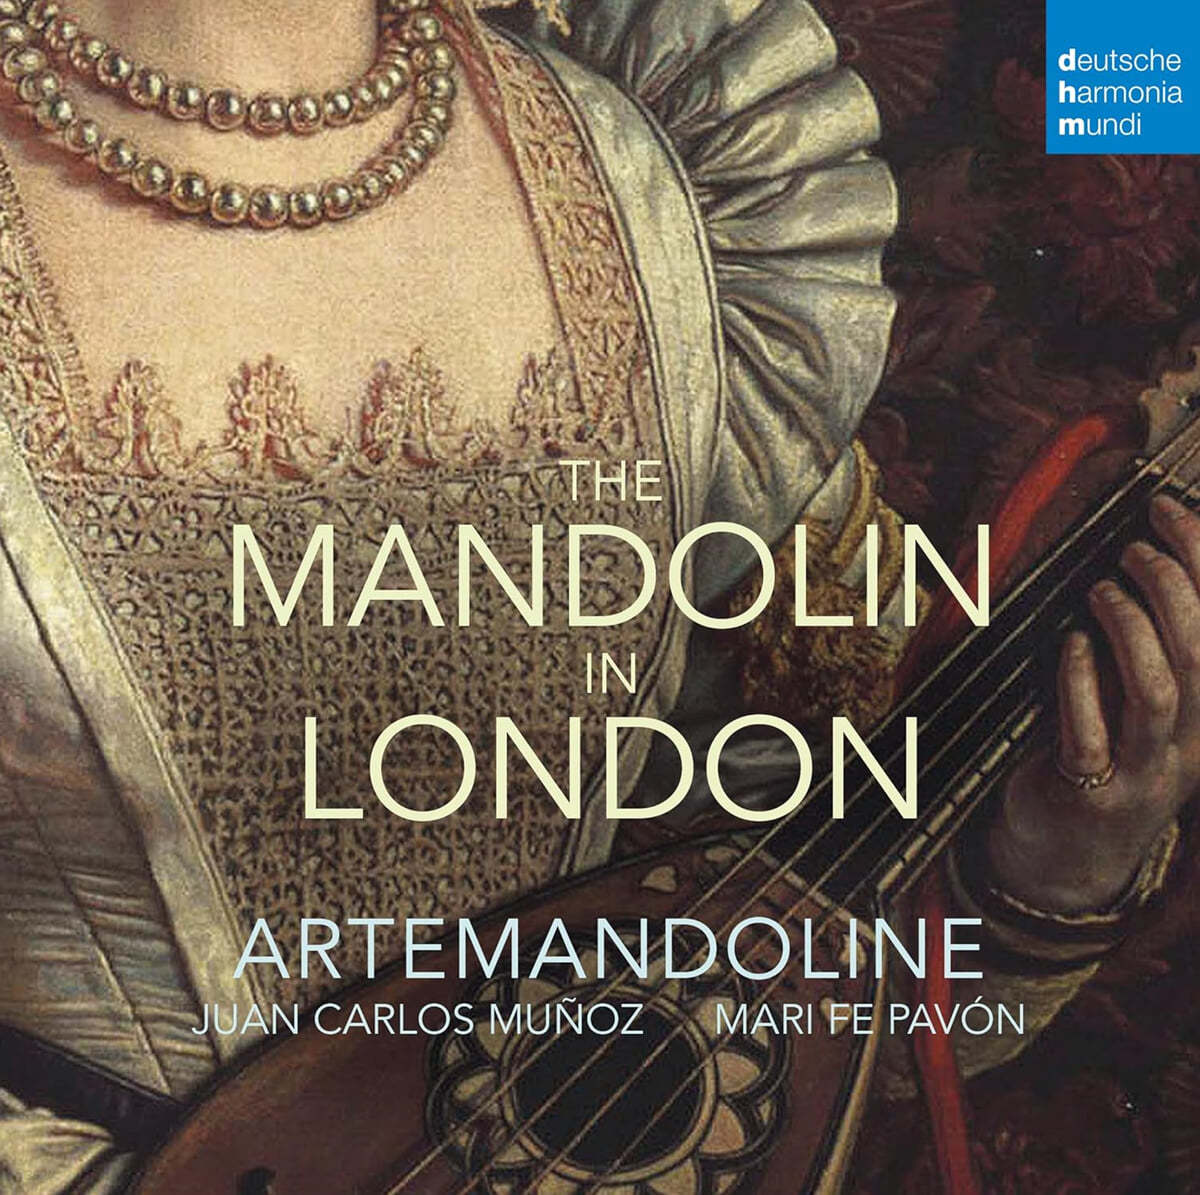 Artemandoline 아르테만돌린 앙상블 연주집 (The Mandolin In London)